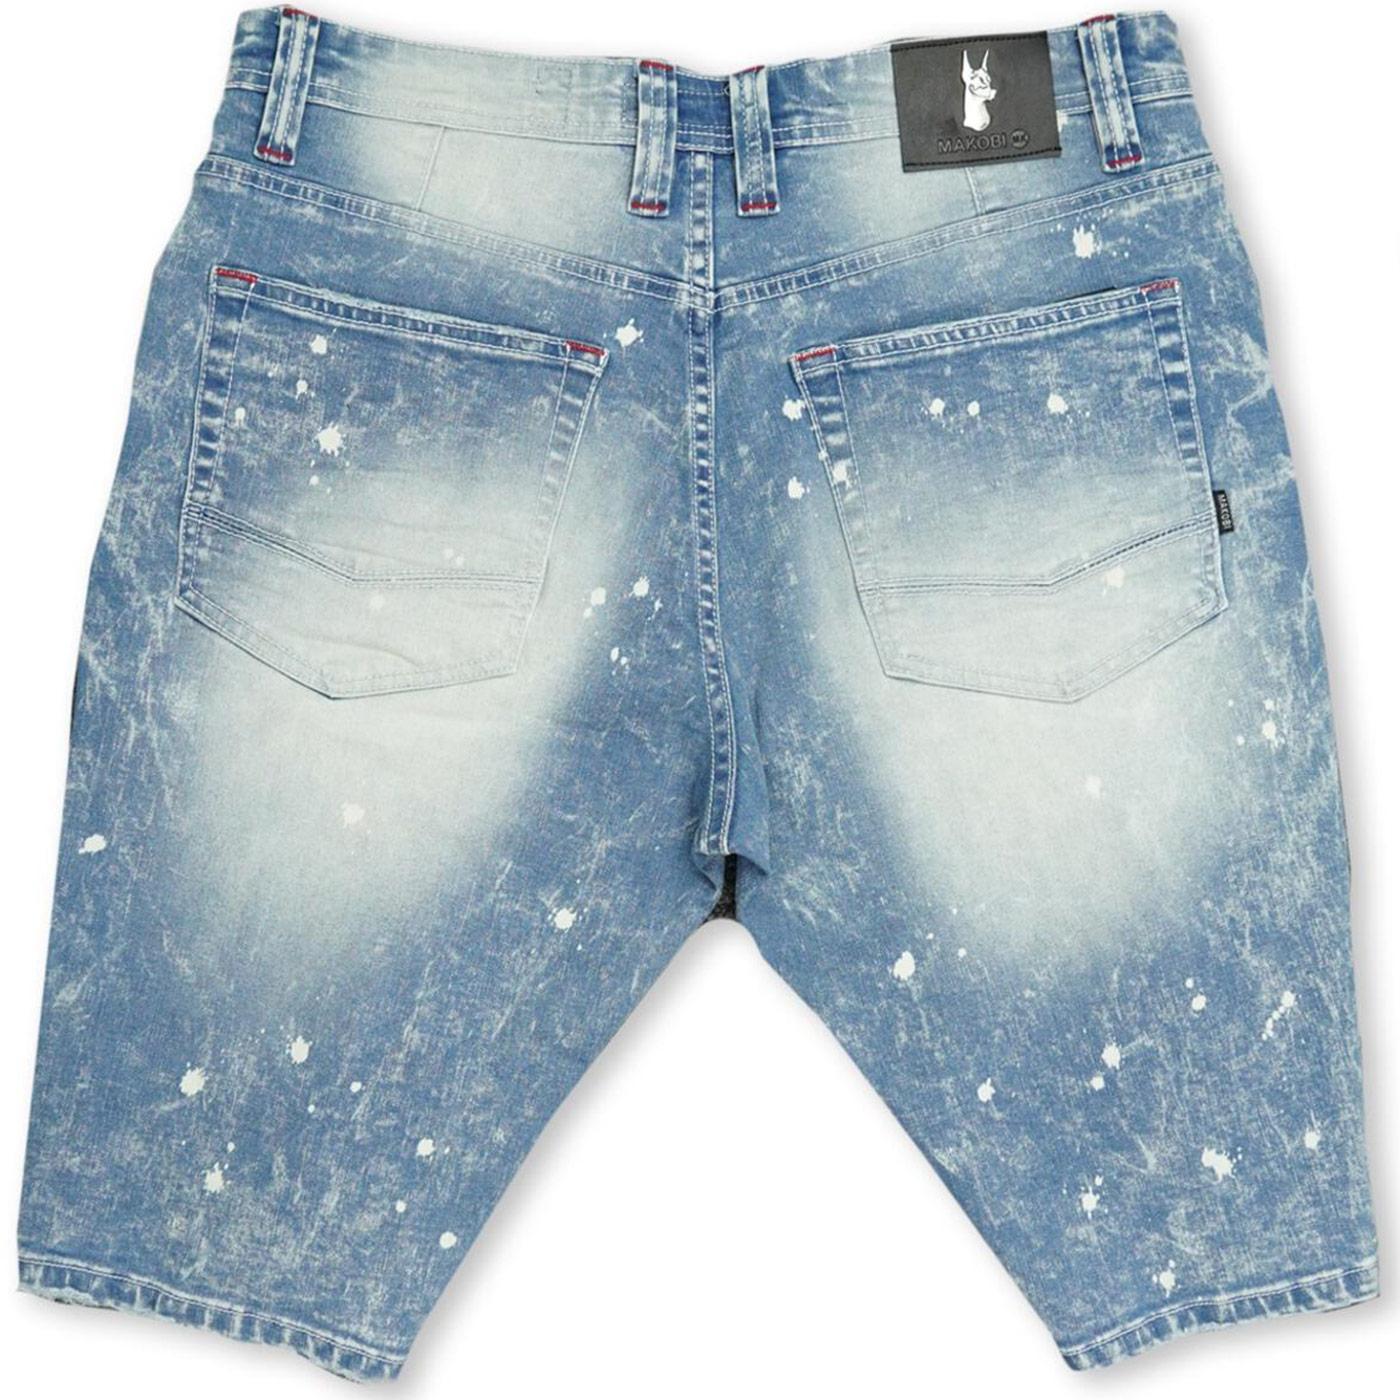 M771 Pacifica Shredded Shorts (Light Wash) Rear | Makobi Jeans USA